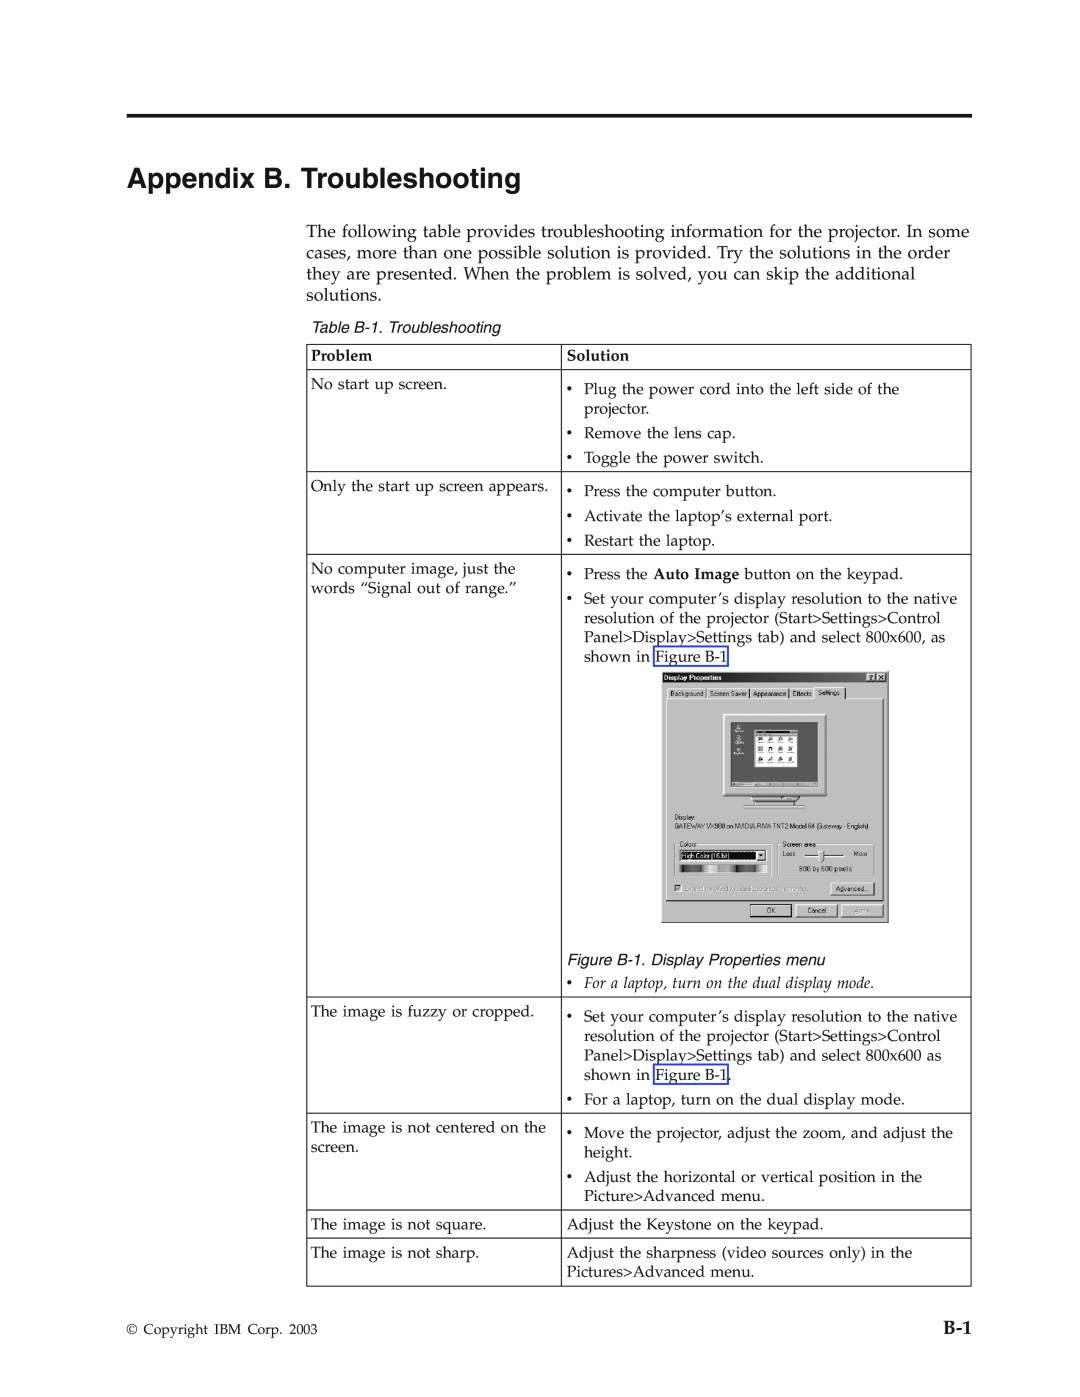 IBM Partner Pavilion iLV300 manual Appendix B. Troubleshooting, Table B-1. Troubleshooting, Problem, Solution 